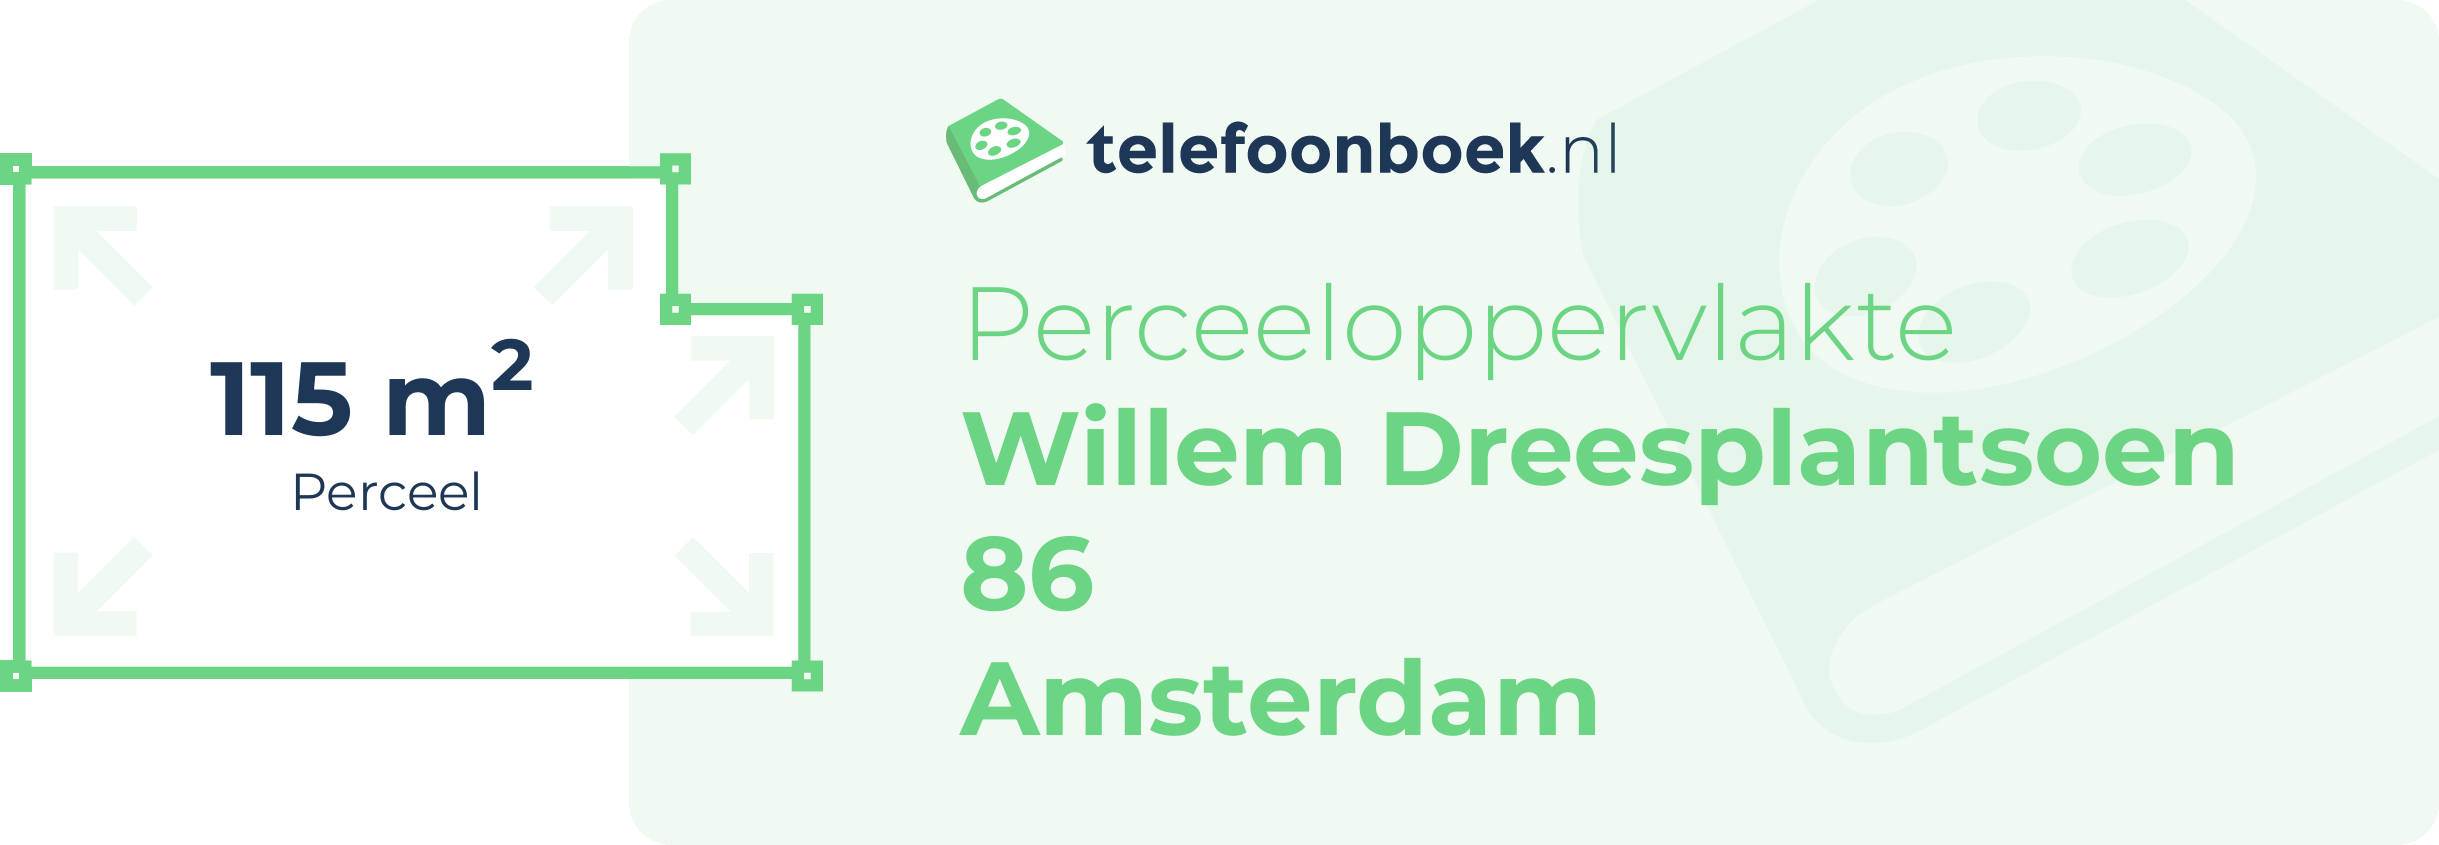 Perceeloppervlakte Willem Dreesplantsoen 86 Amsterdam